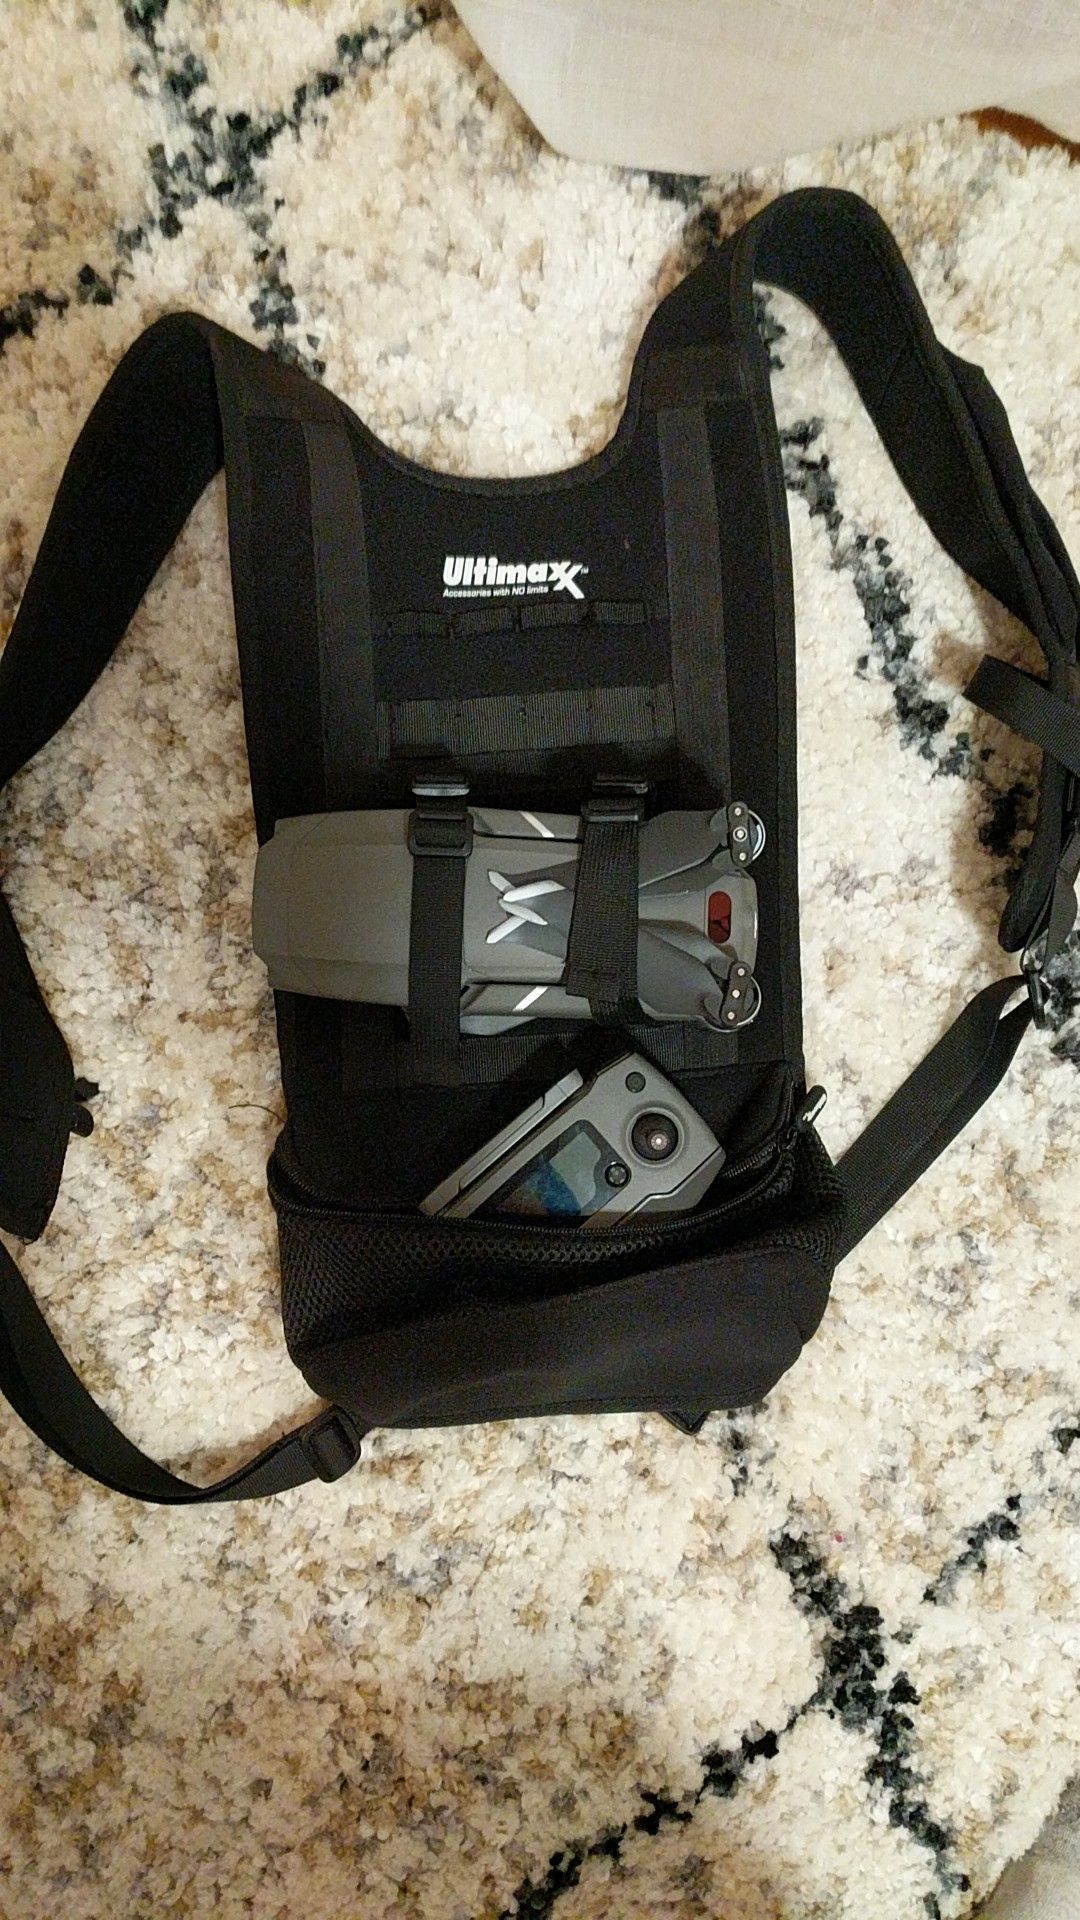 Ultimax mavic pro backpack